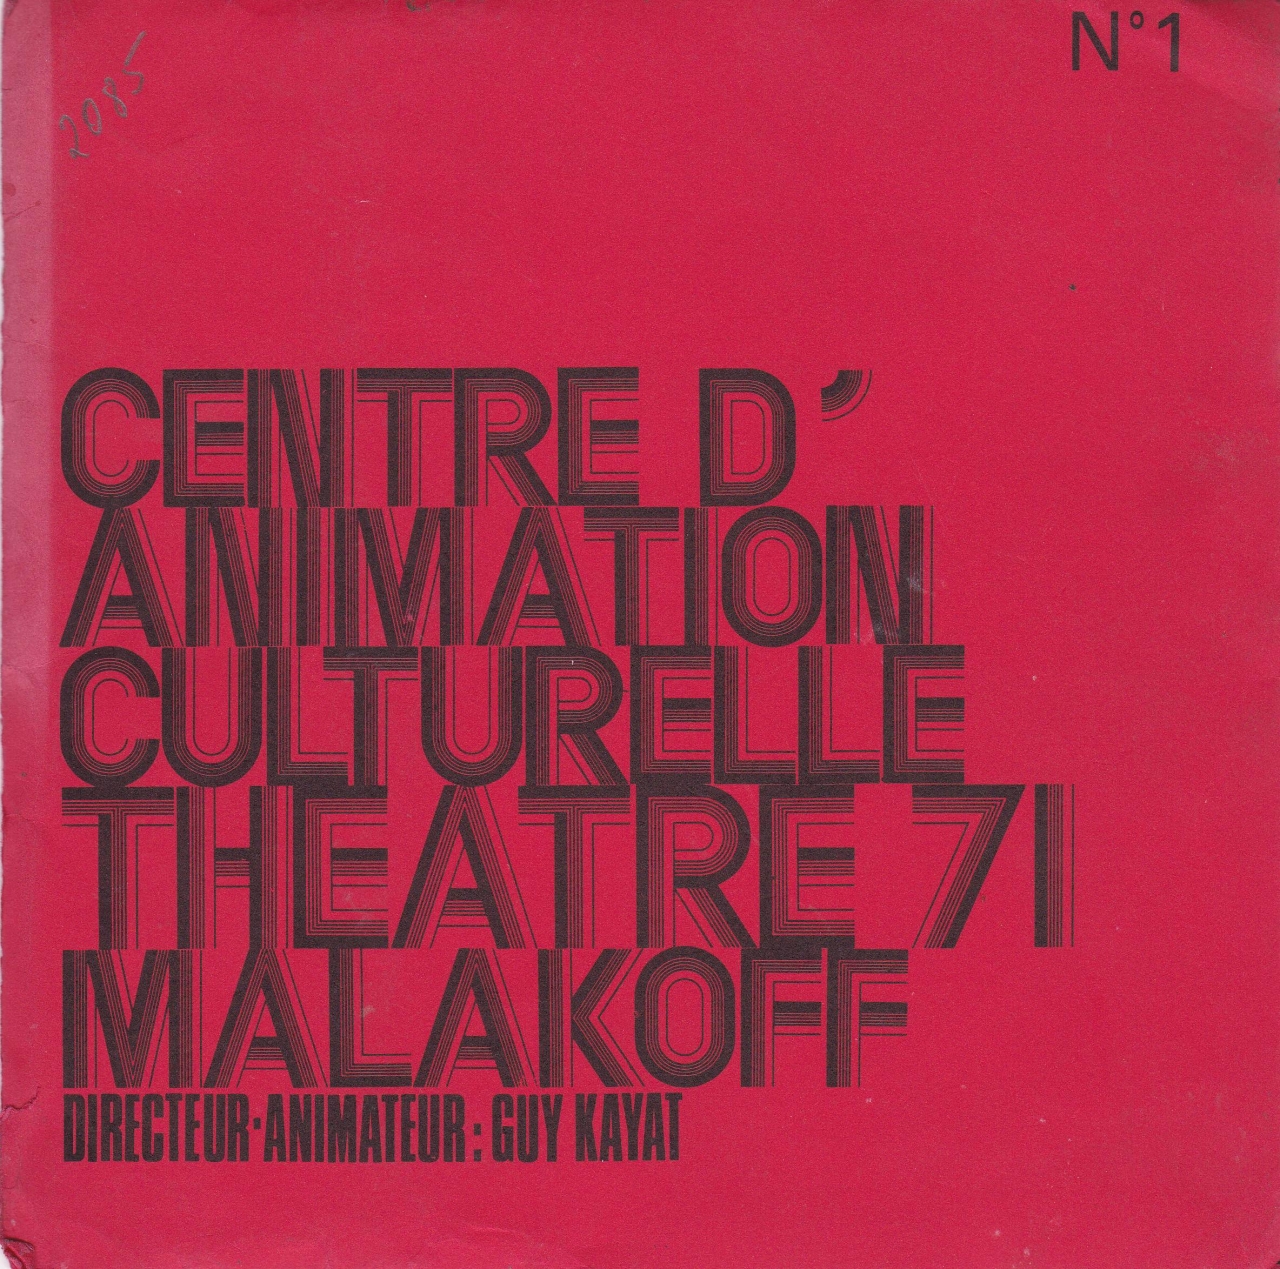 ”Centre d՚ animation culturelle theatre 71 Malkoff”